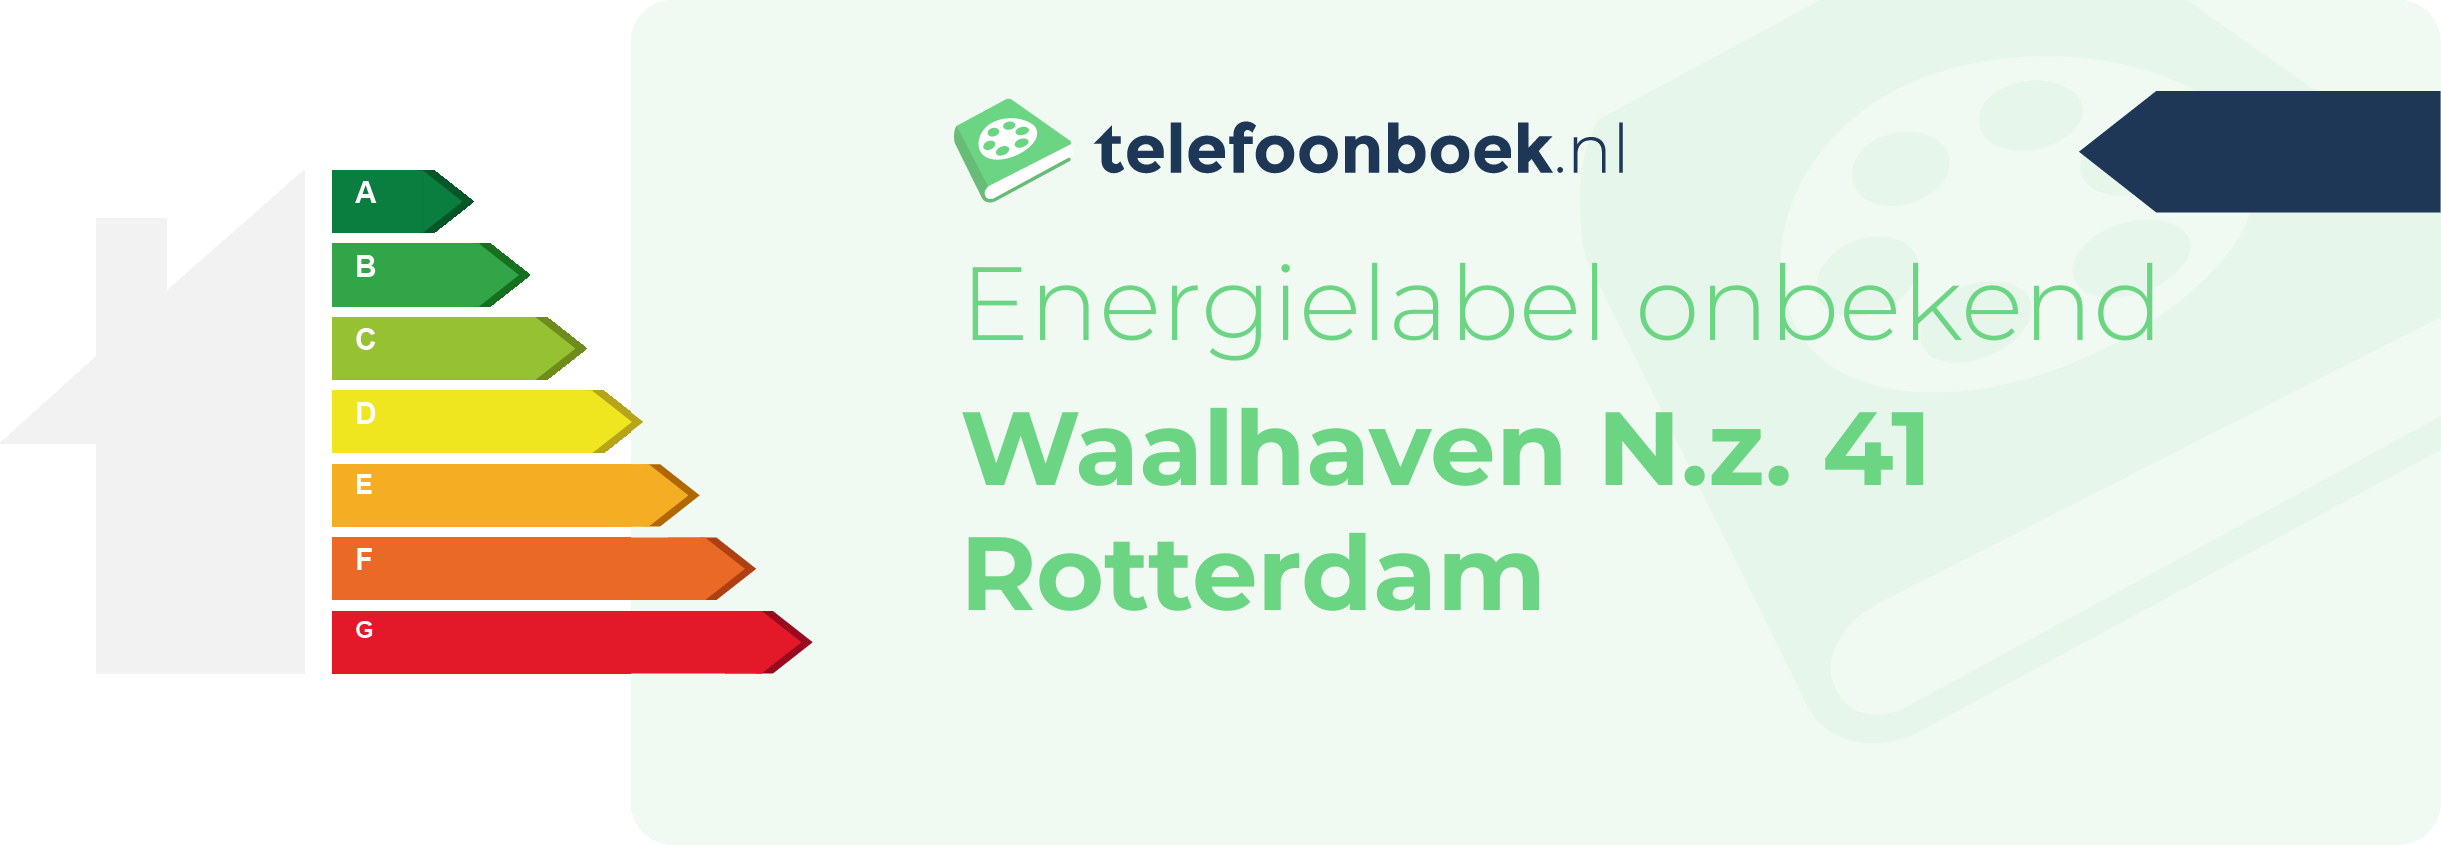 Energielabel Waalhaven N.z. 41 Rotterdam